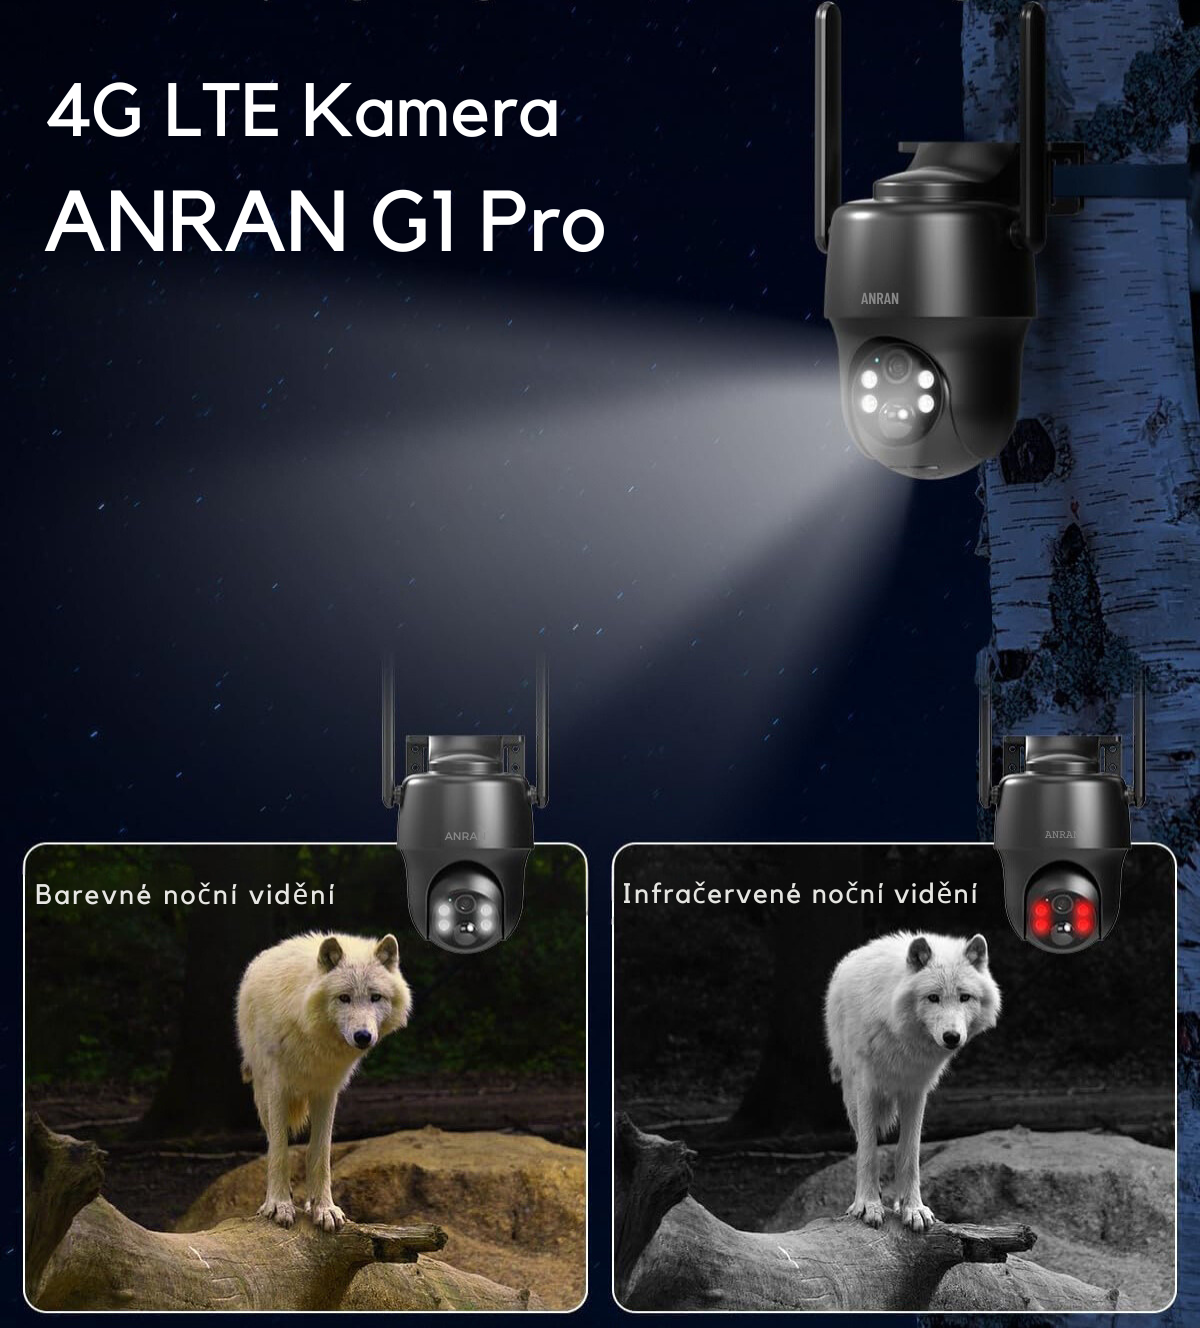 4G LTE Kamera